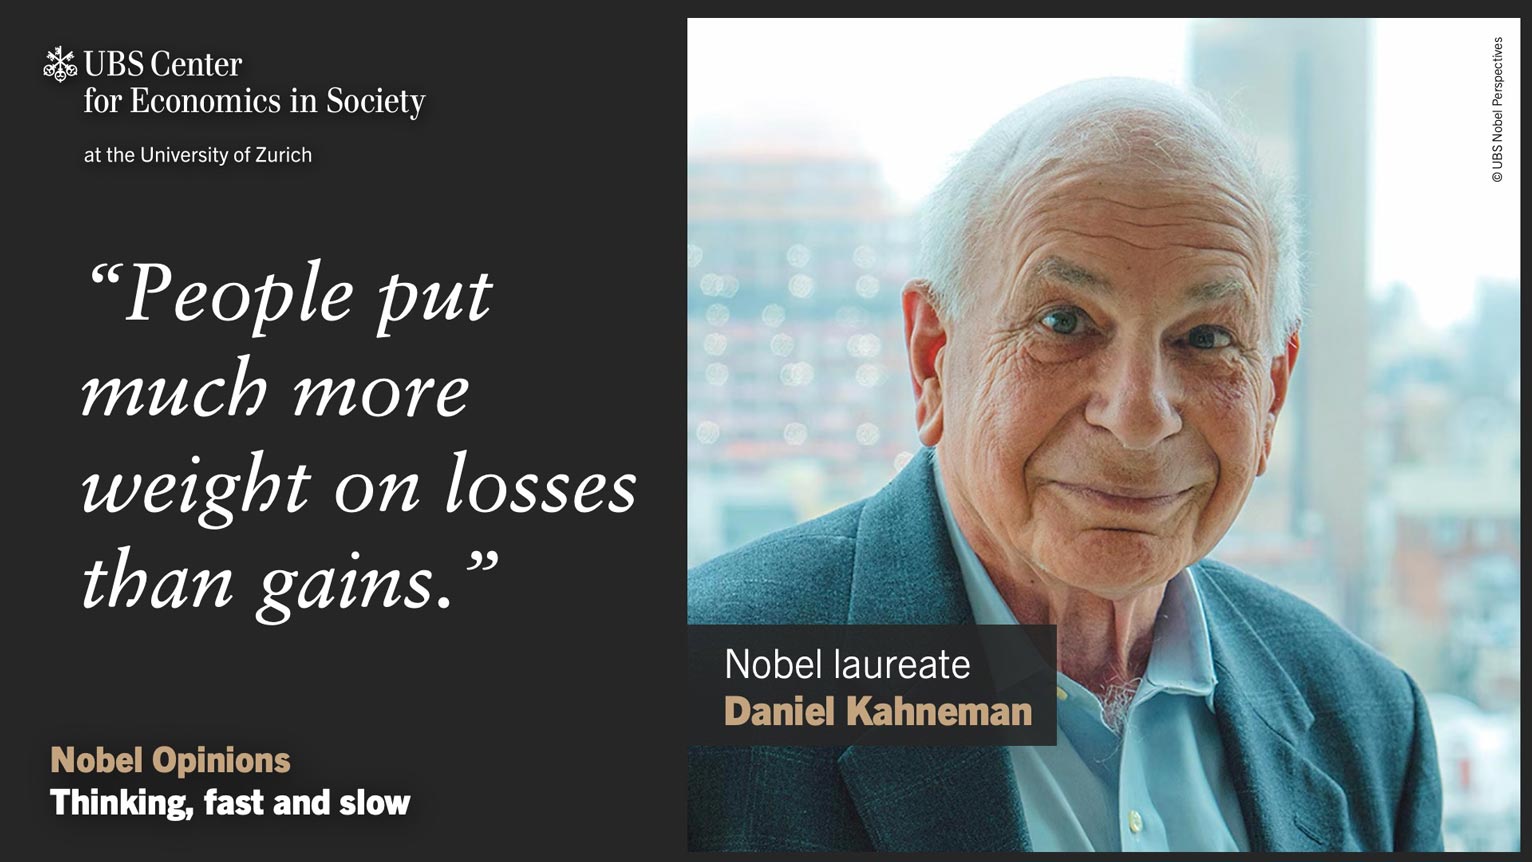 Nobel laureate Daniel Kahneman: Thinking, Fast and Slow